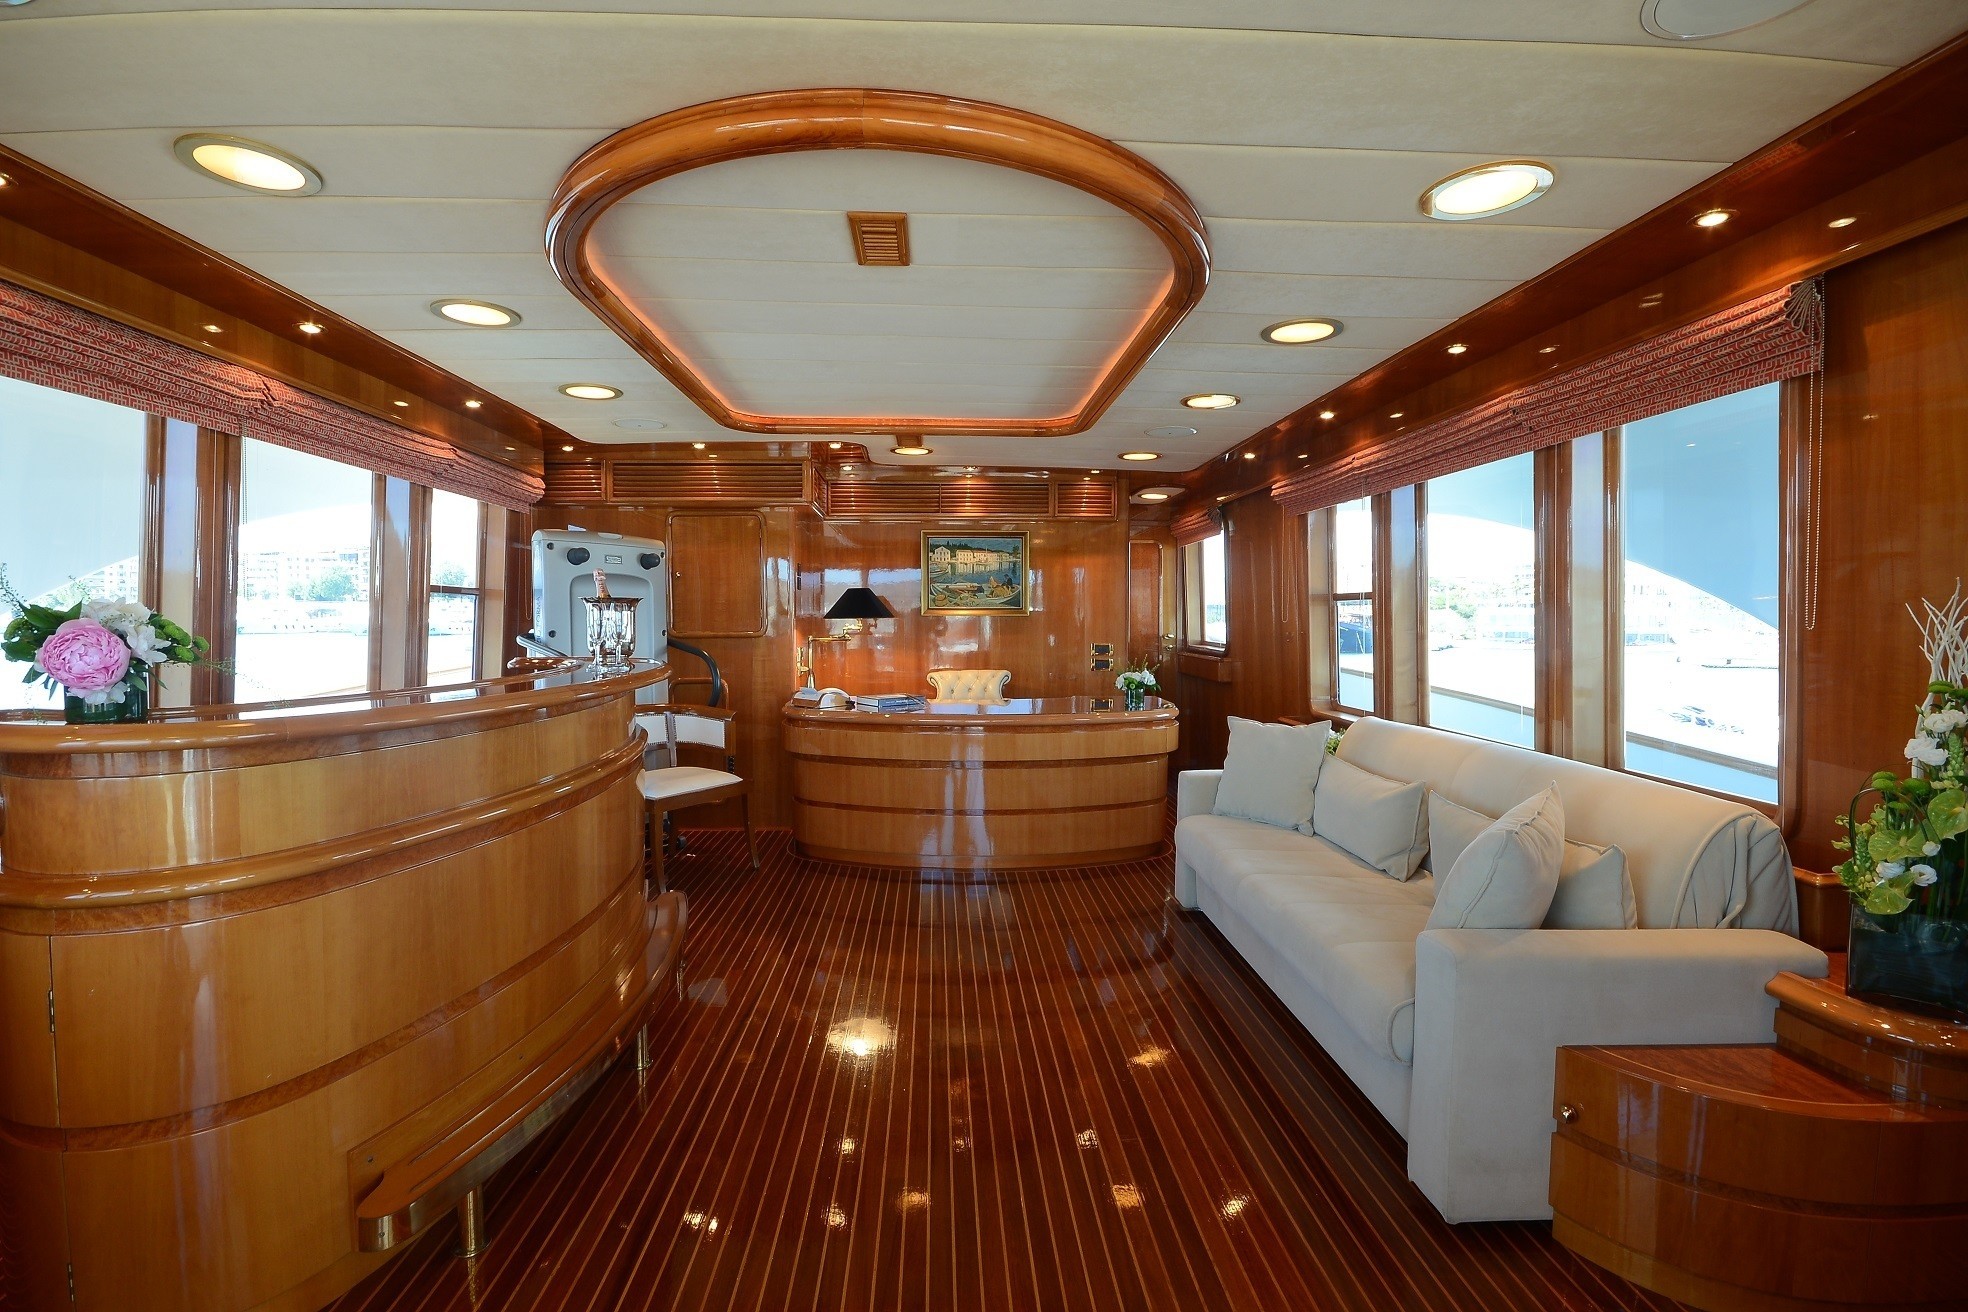 The 34m Yacht CAMELLIA